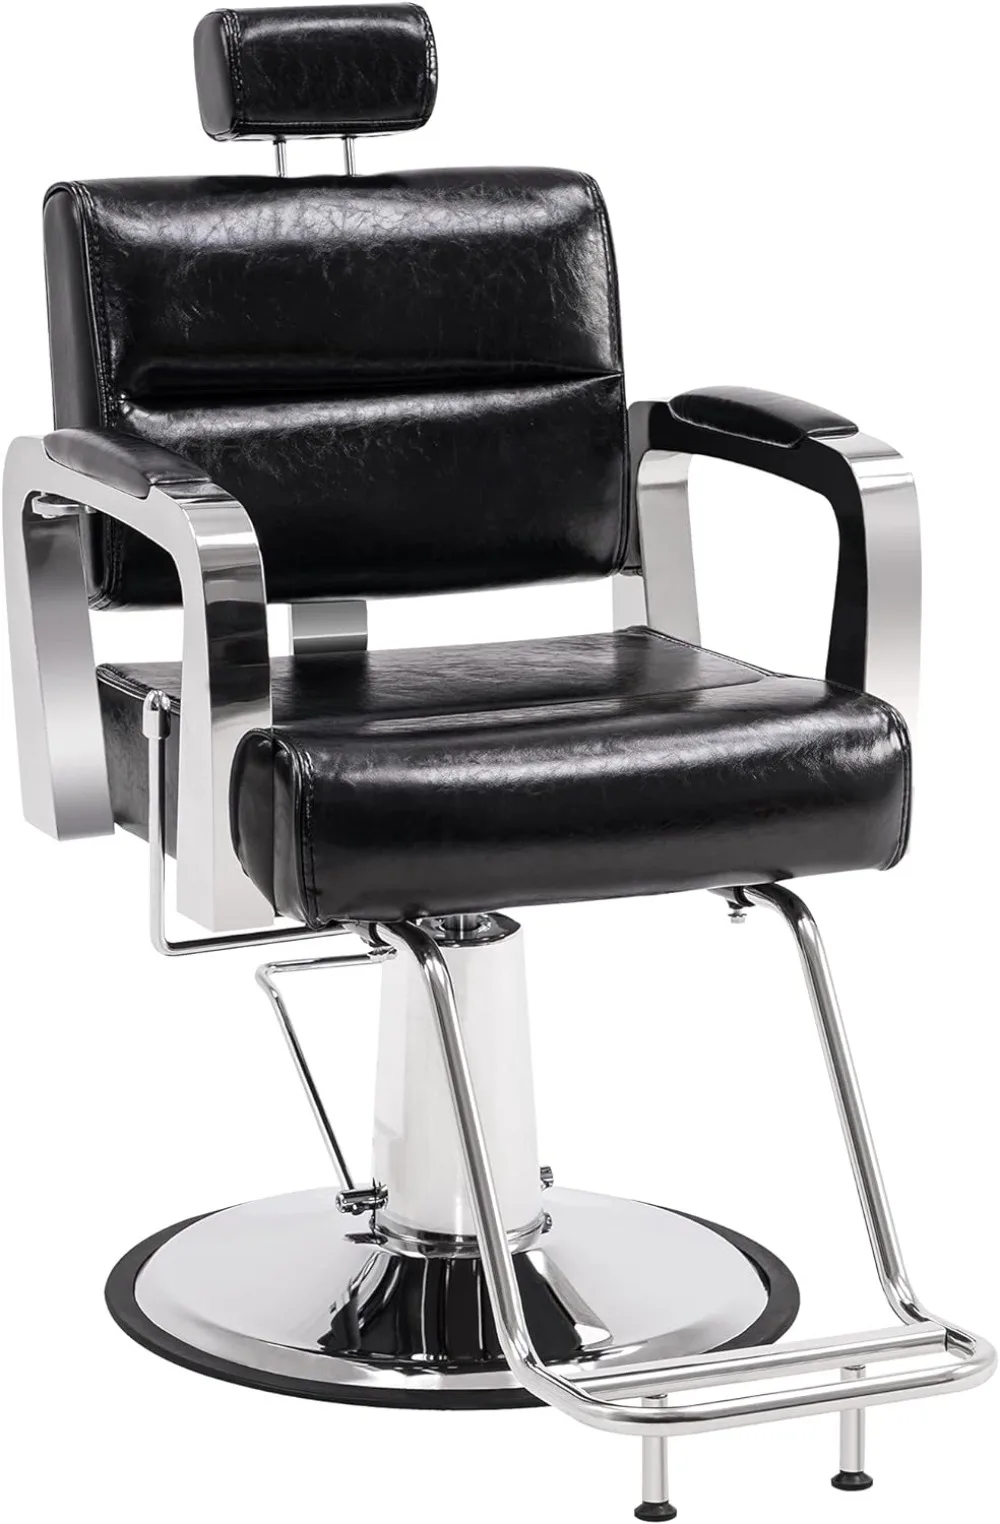 BarberPub Barber Chair Reclining Salon Chair for Hair Stylist, Antique Hair Spa Salon Styling Beauty Equipment 3127(Black)